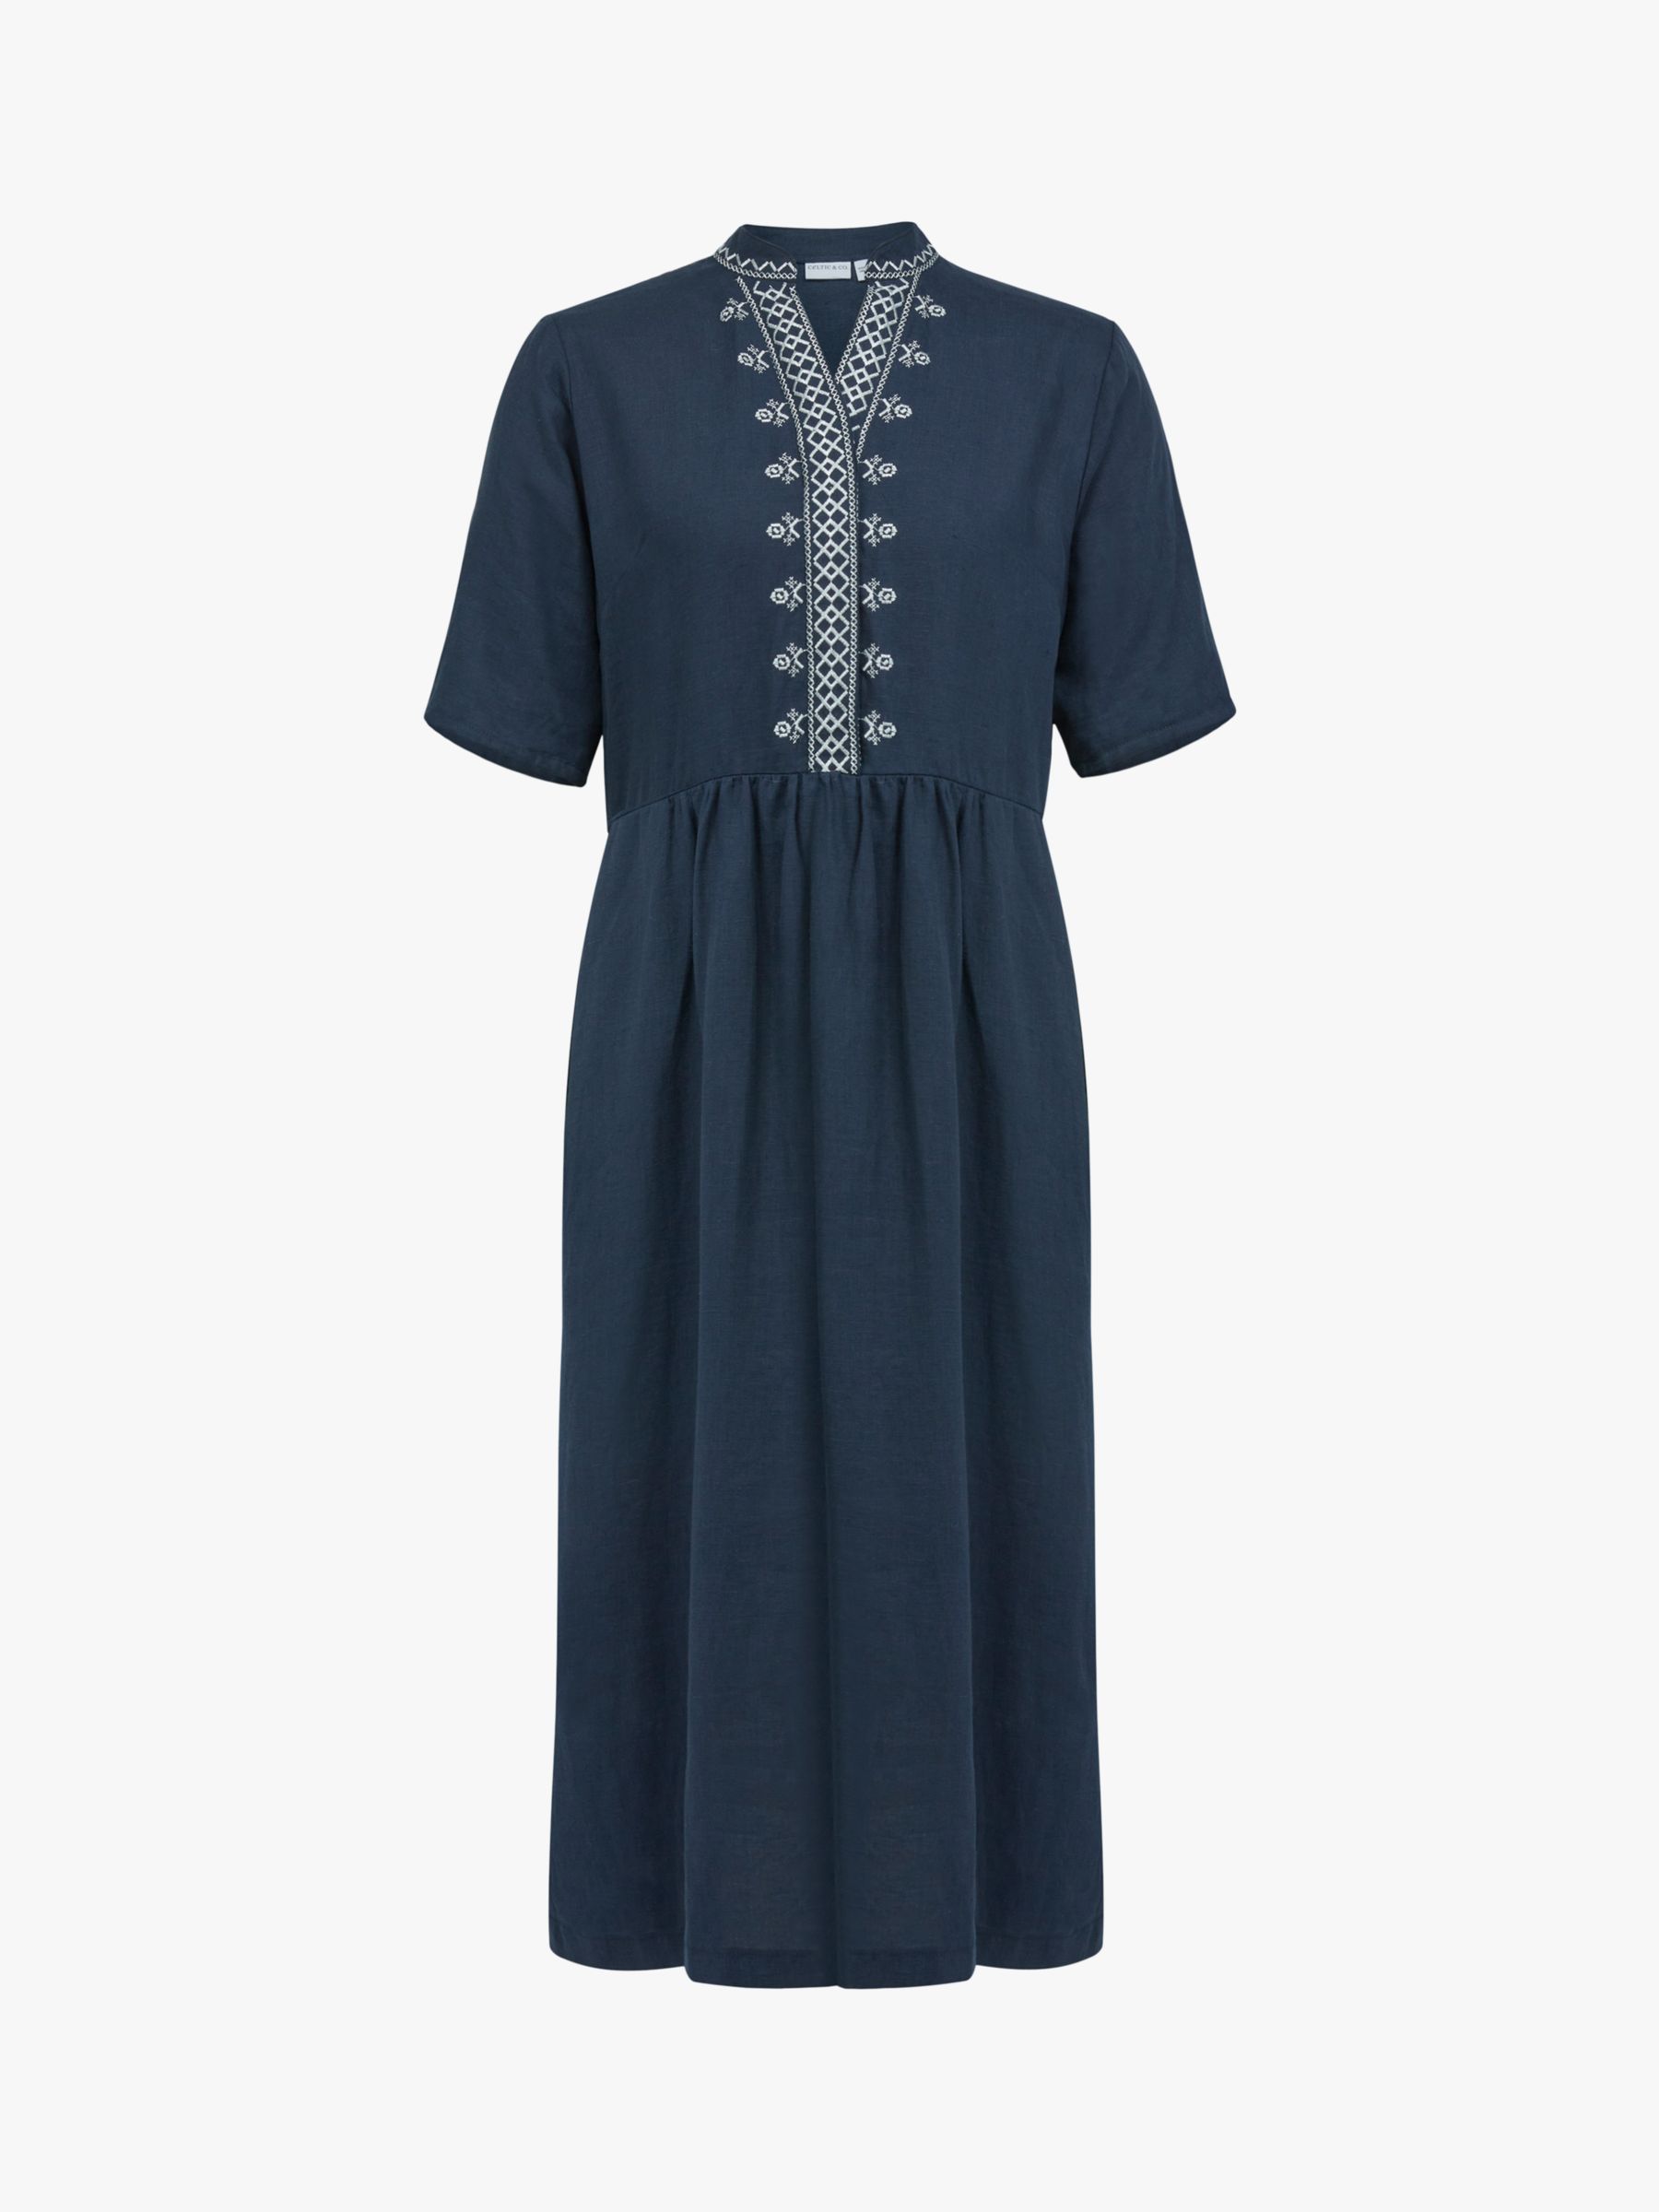 Celtic & Co. Embroidered Collar Linen Midi Dress, Dark Navy, 8